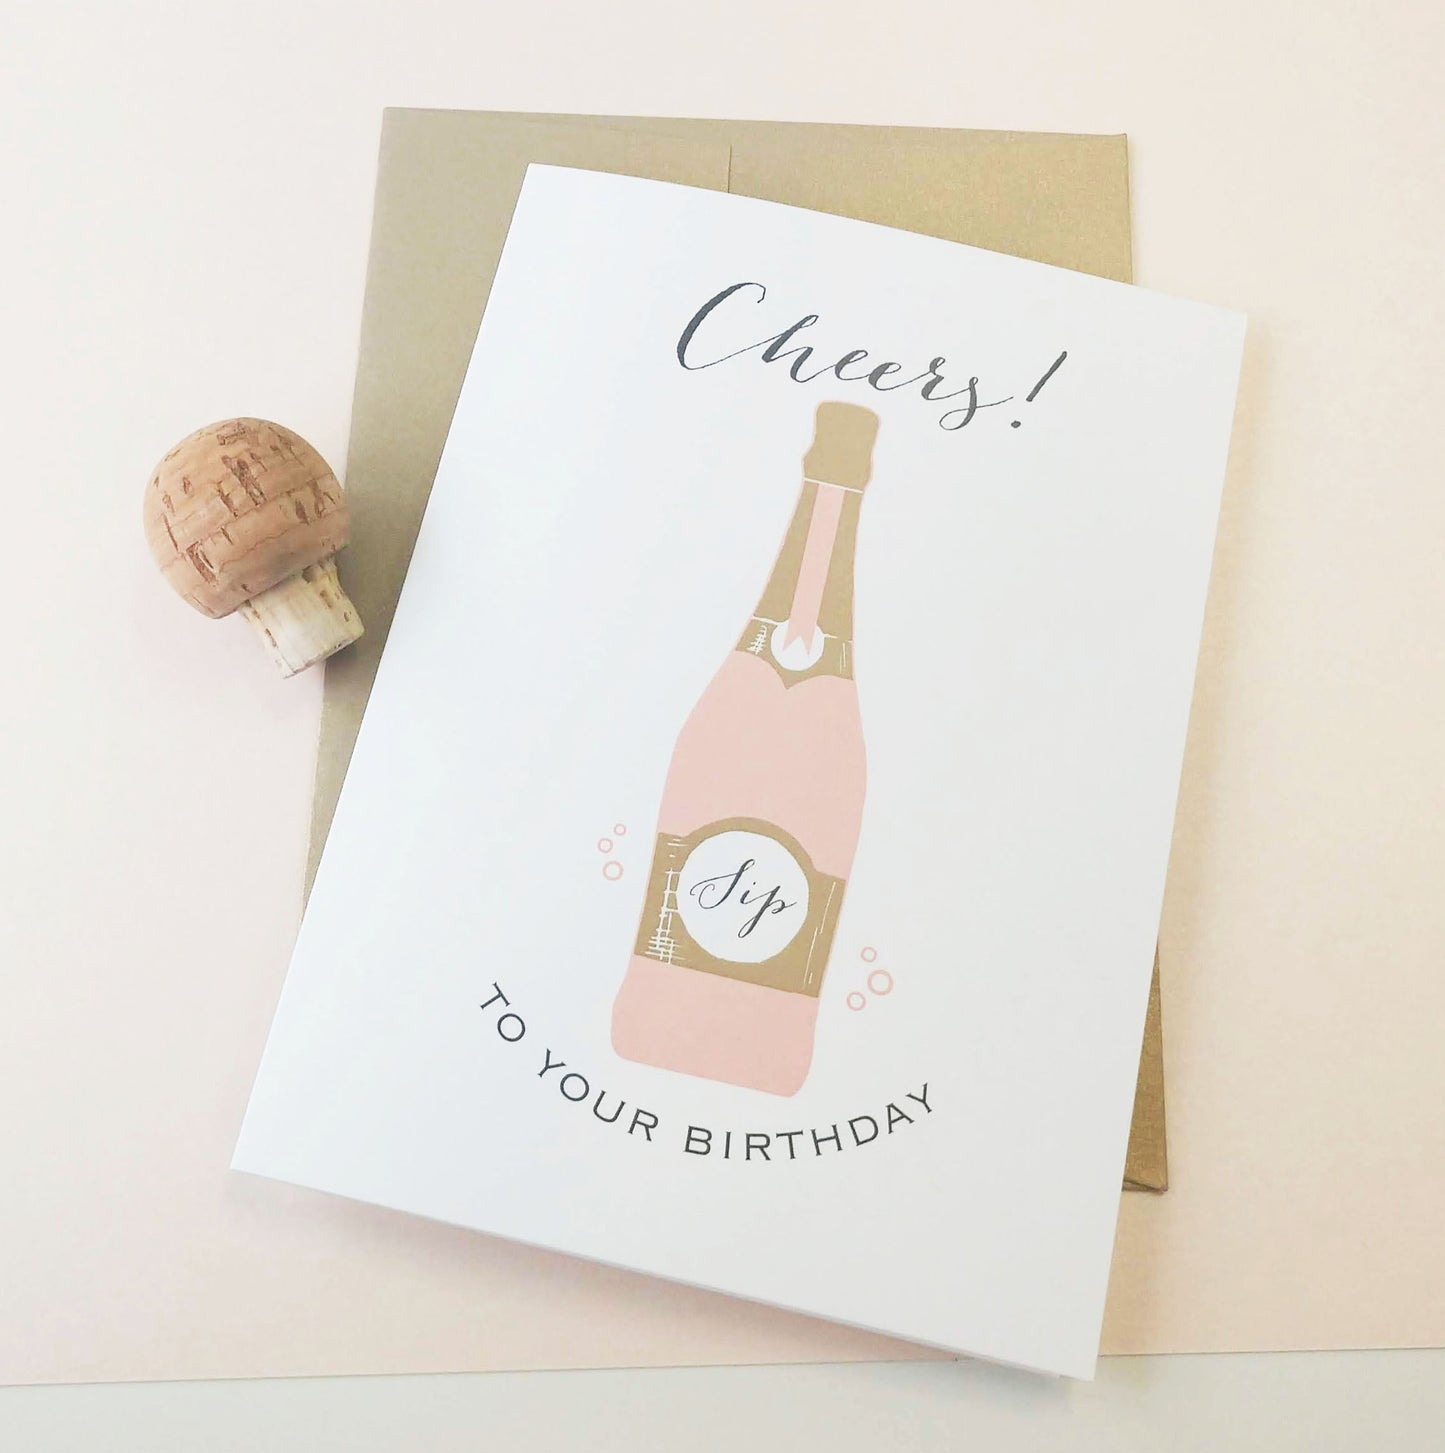 Rose Champagne Bottle Cheers Birthday Card - Idea Chíc